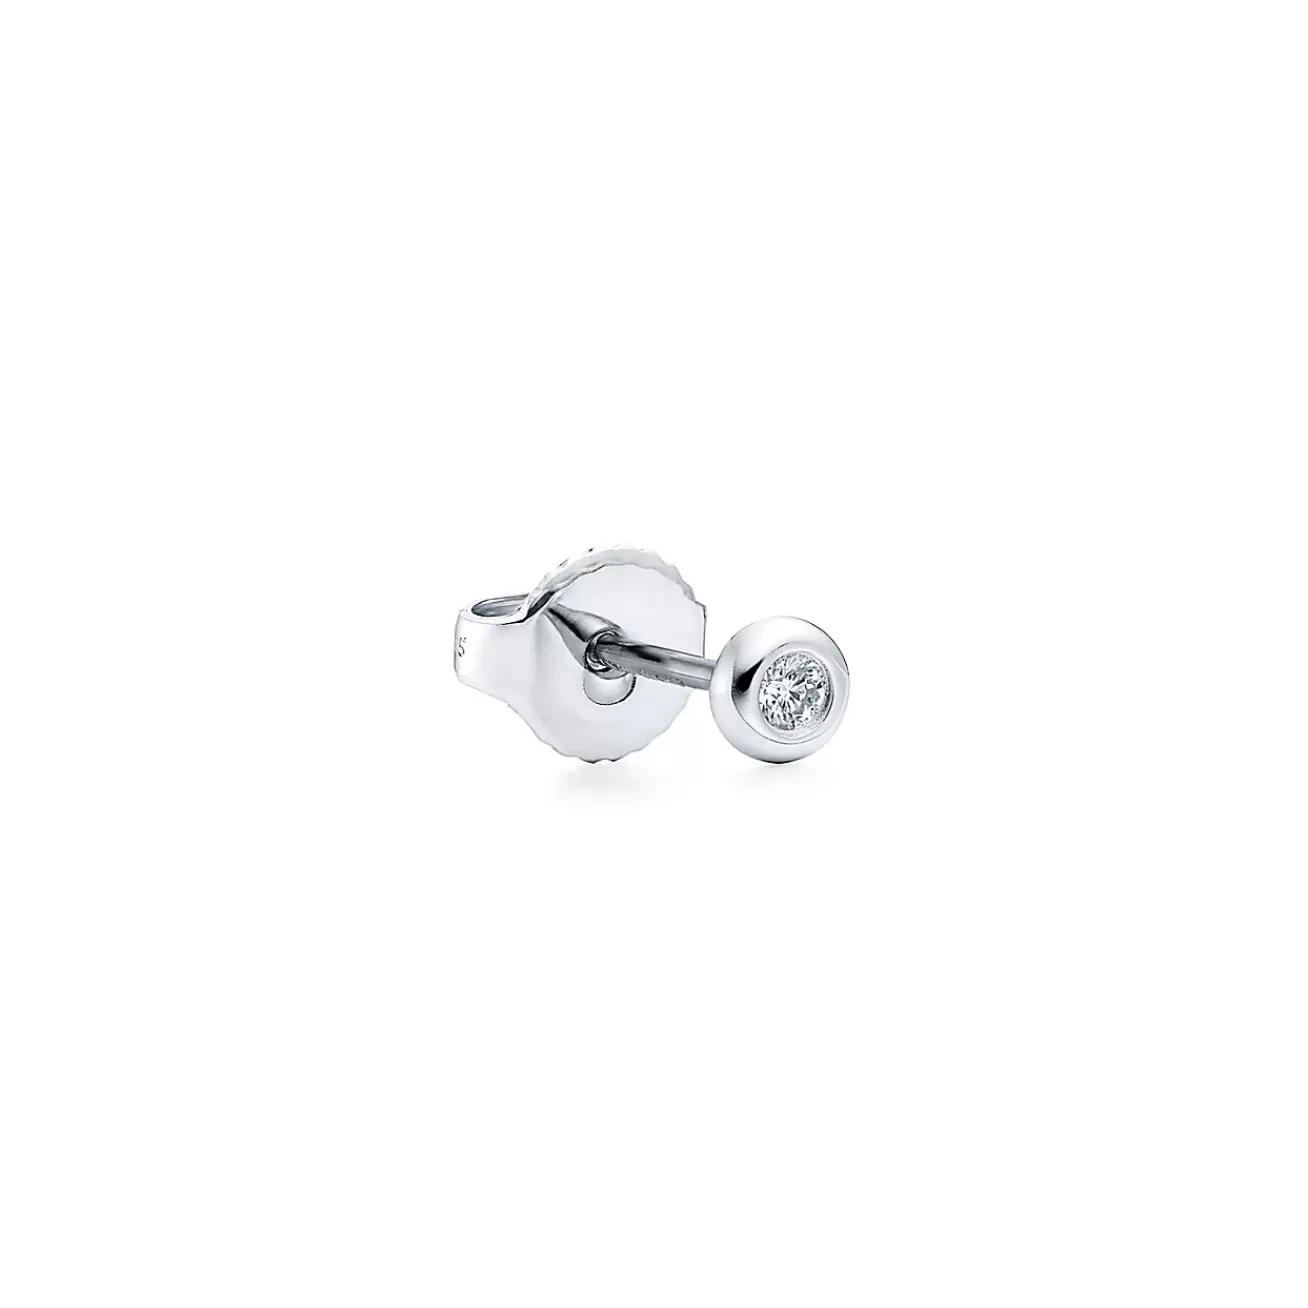 Tiffany & Co. Elsa Peretti® Diamonds by the Yard® earrings in sterling silver. | ^ Earrings | Gifts for Her